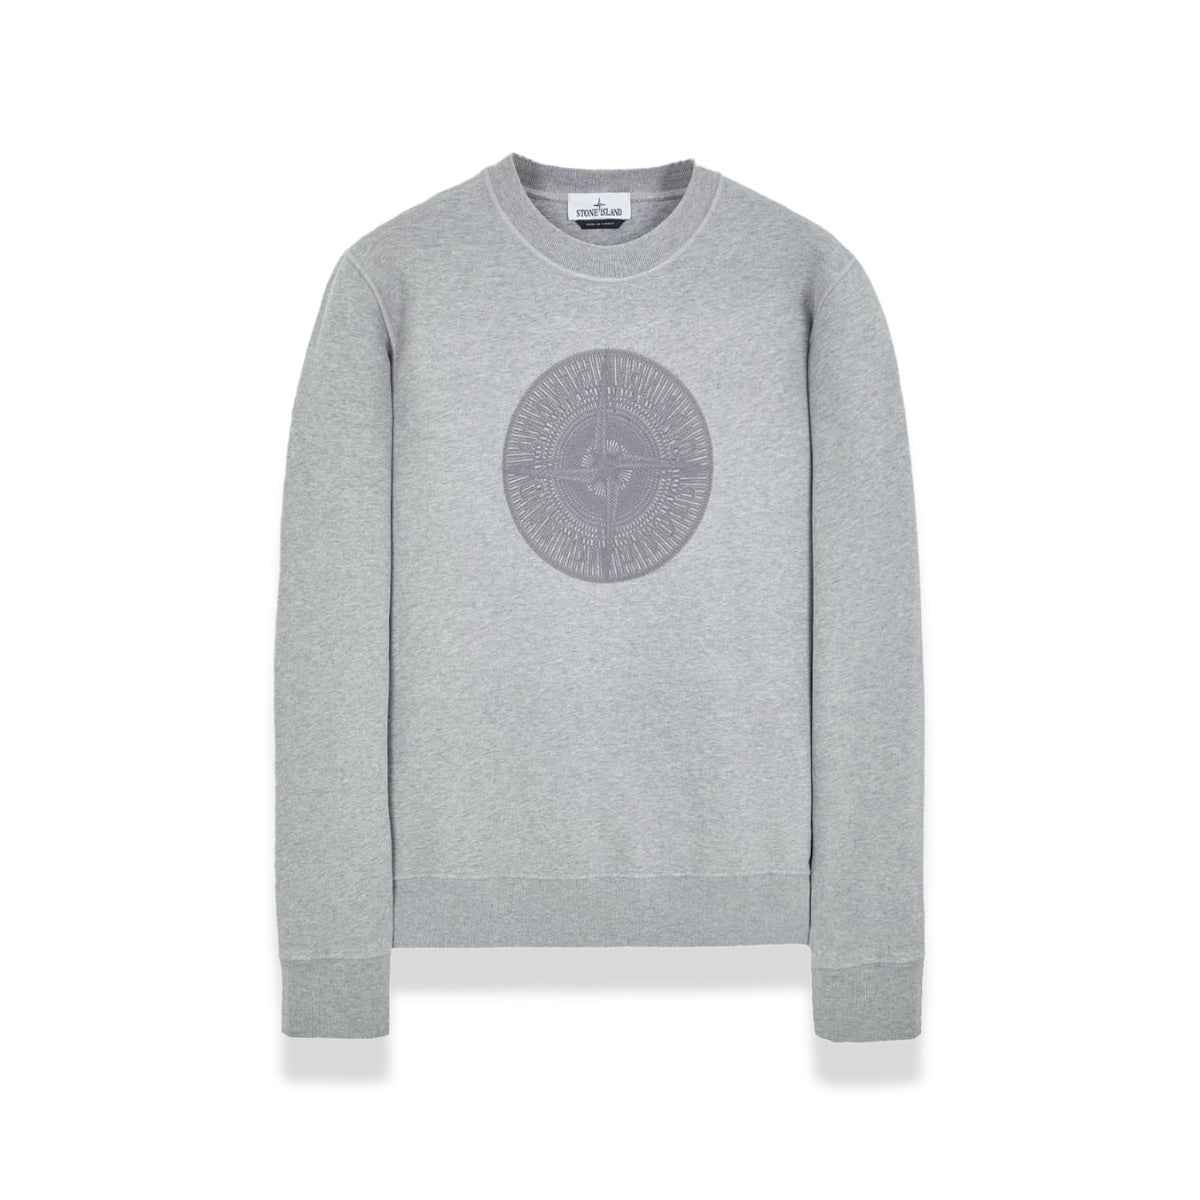 Stone Island - Industrial Logo Sweatshirt Grey